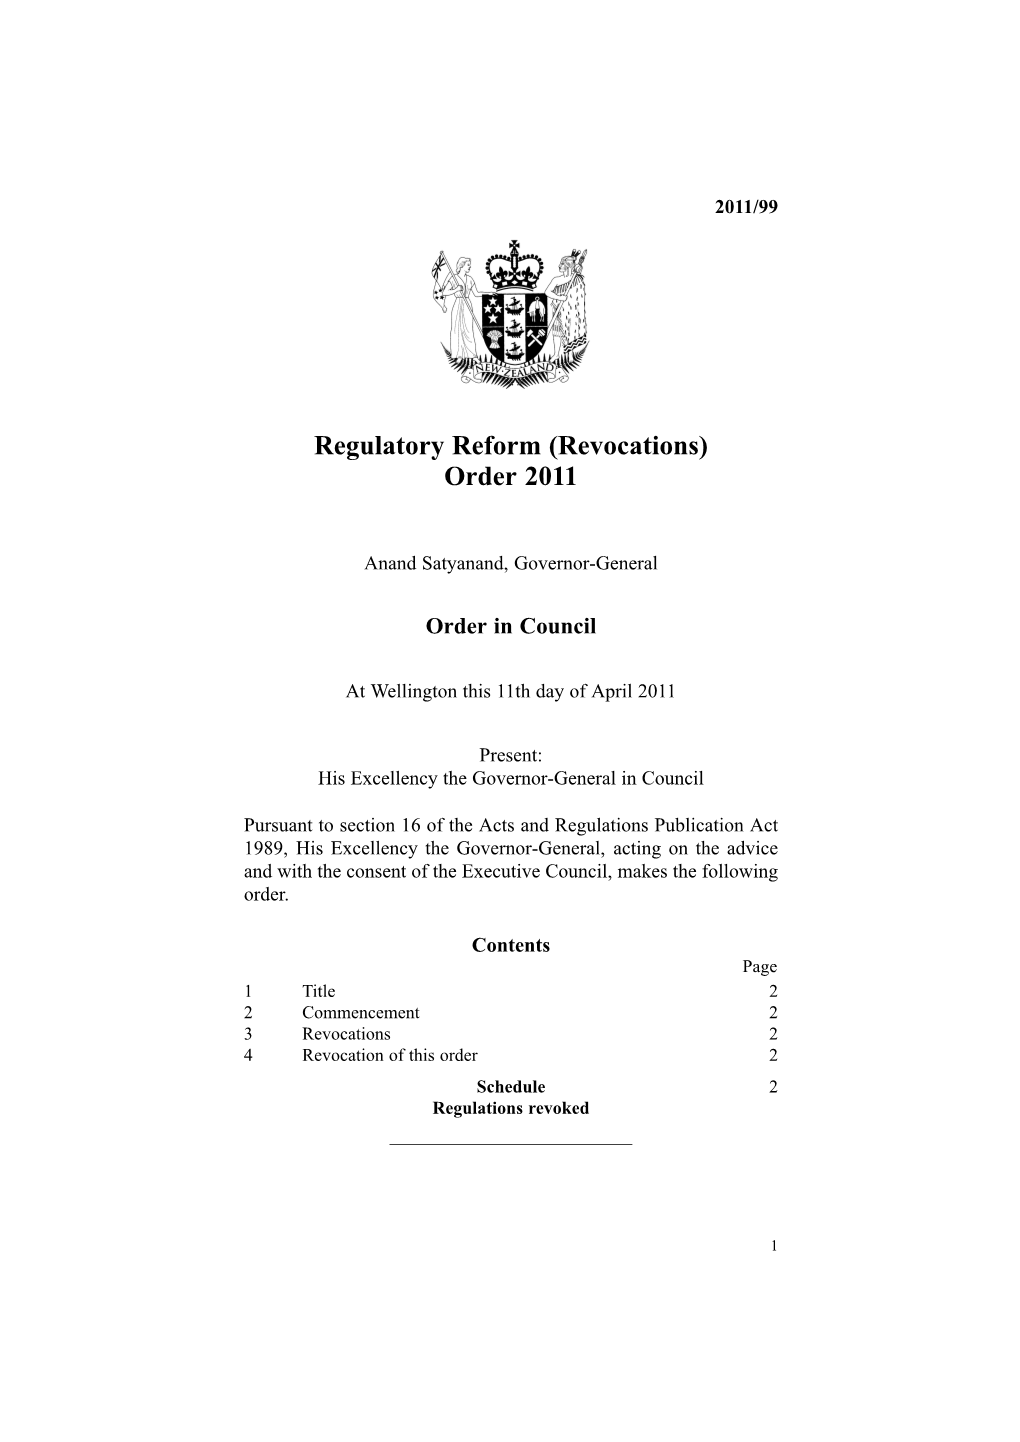 Regulatory Reform (Revocations) Order 2011